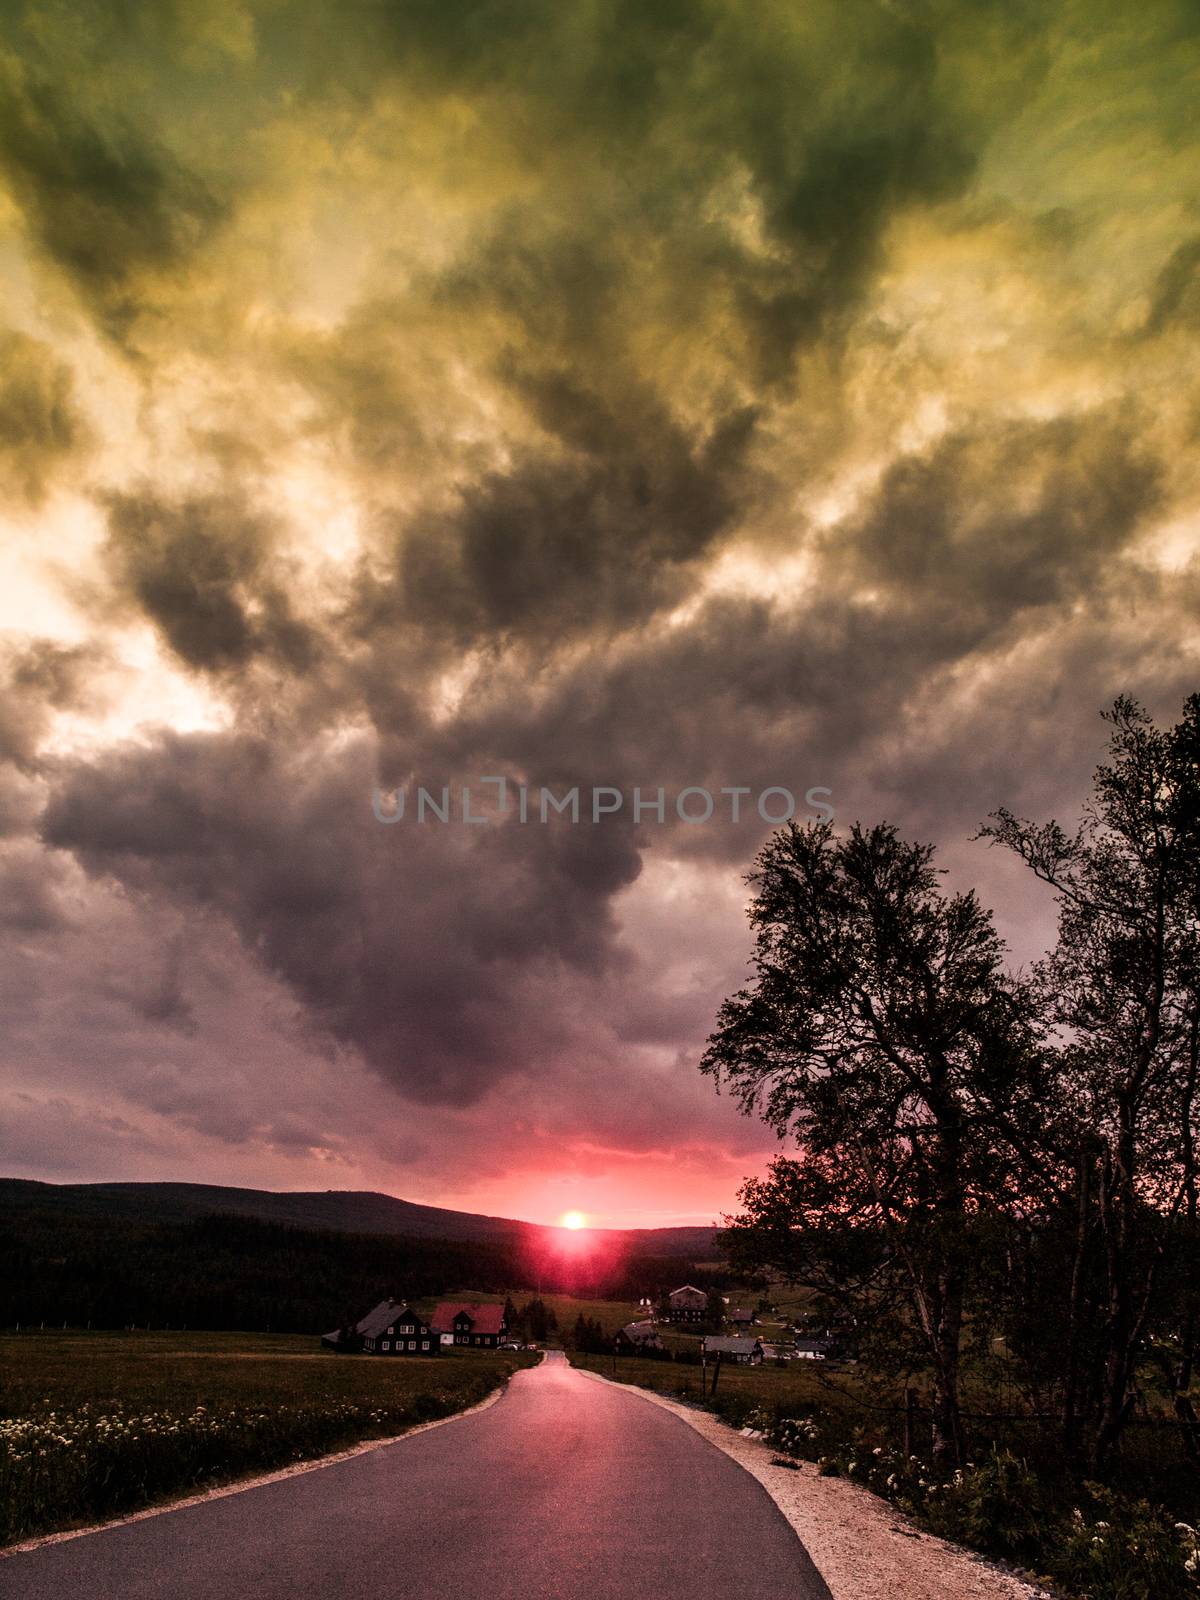 On the road at sunset time near Jizerka village (Czech Republic)